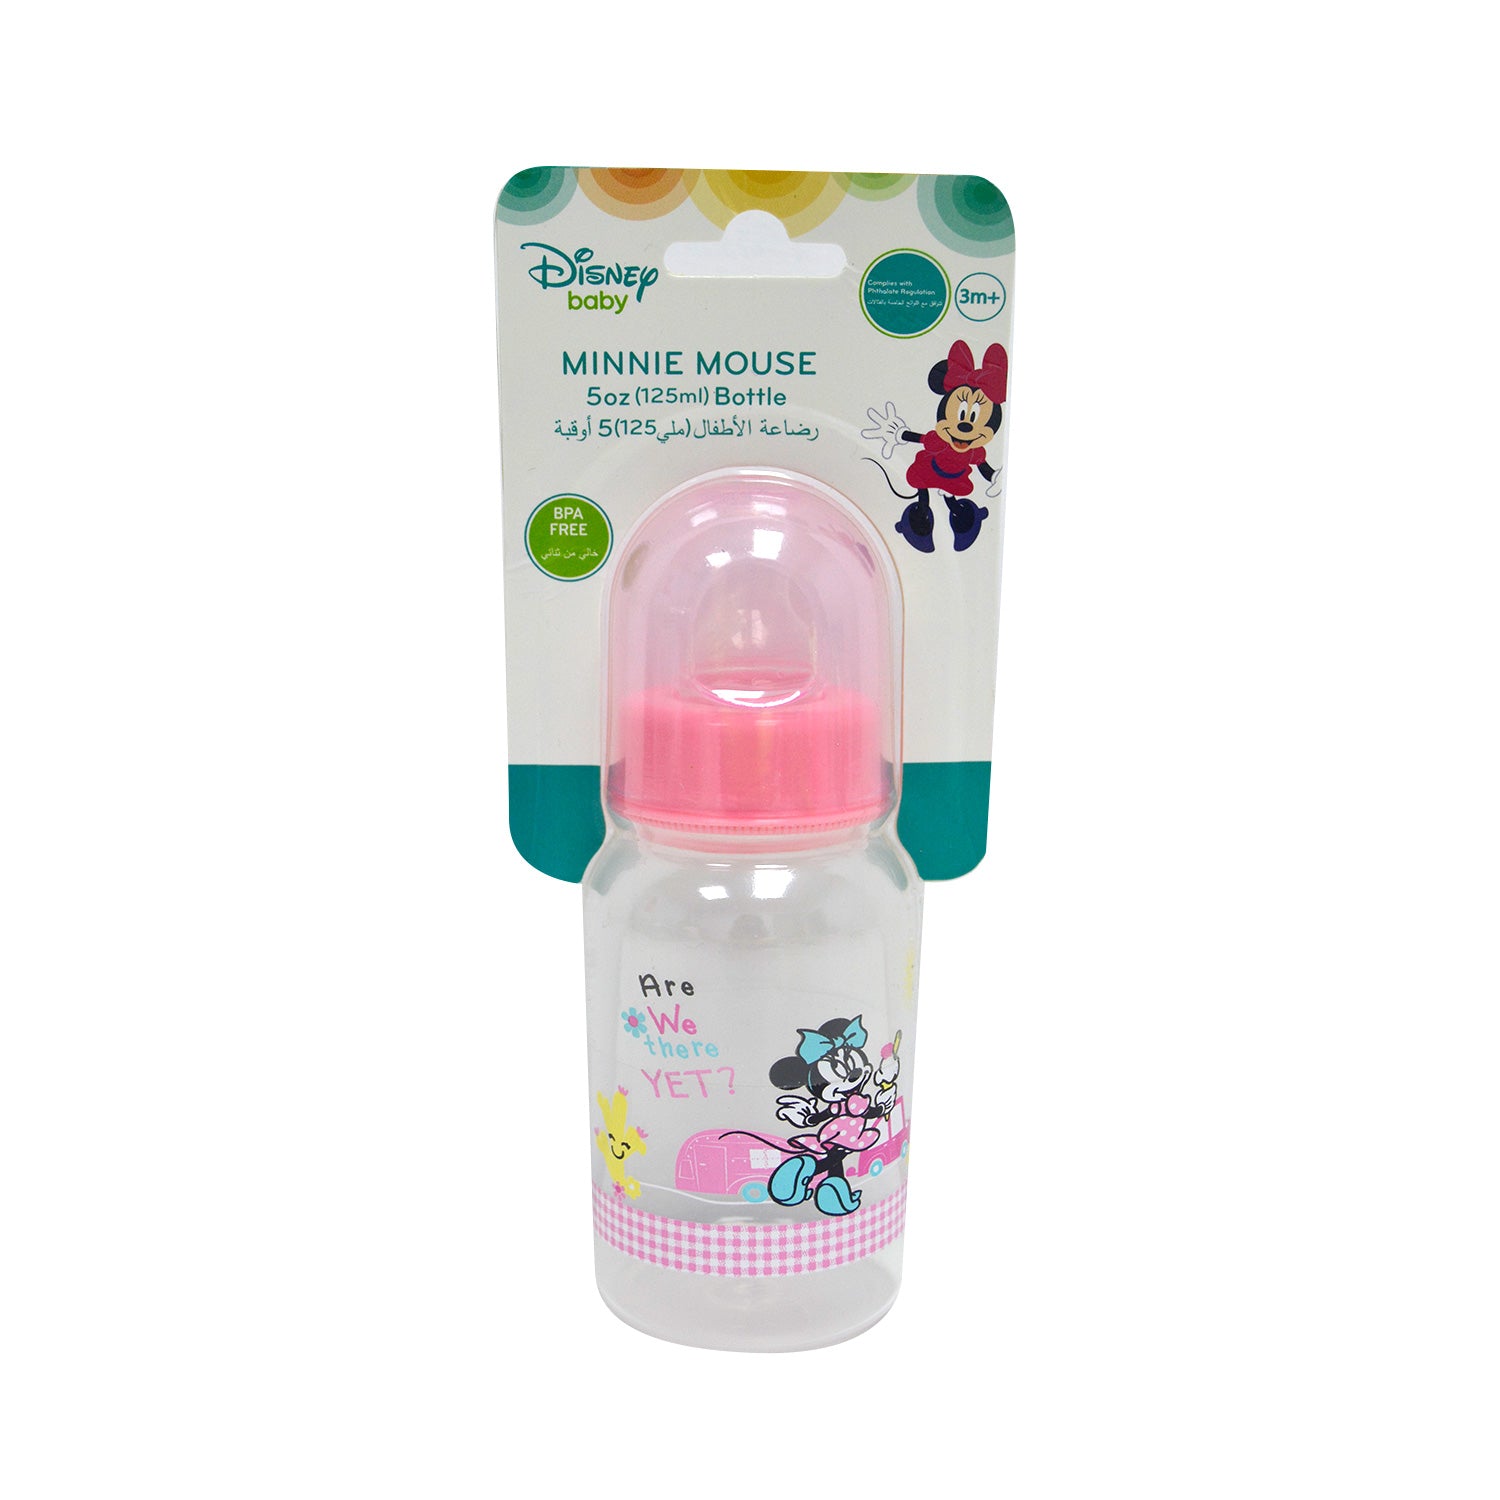 Minnie 5oz Standard Baby Feeding Bottle